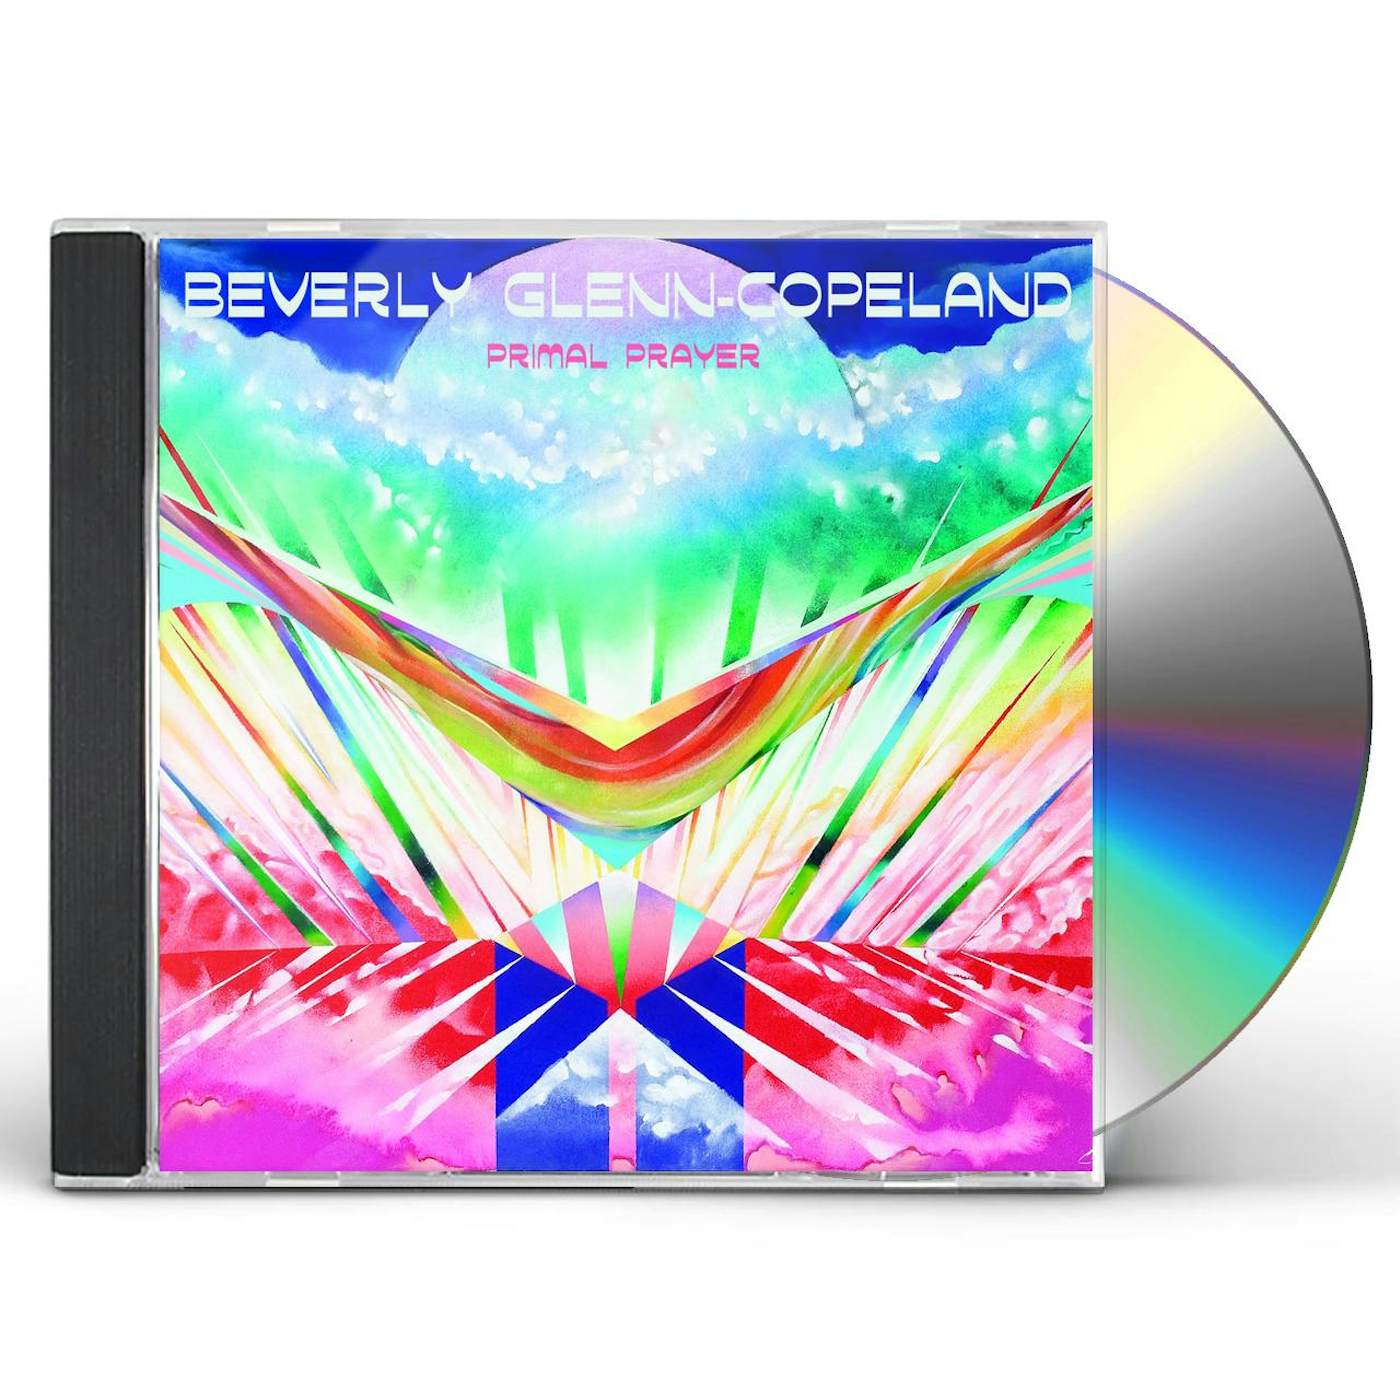 Beverly Glenn-Copeland PRIMAL PRAYER CD